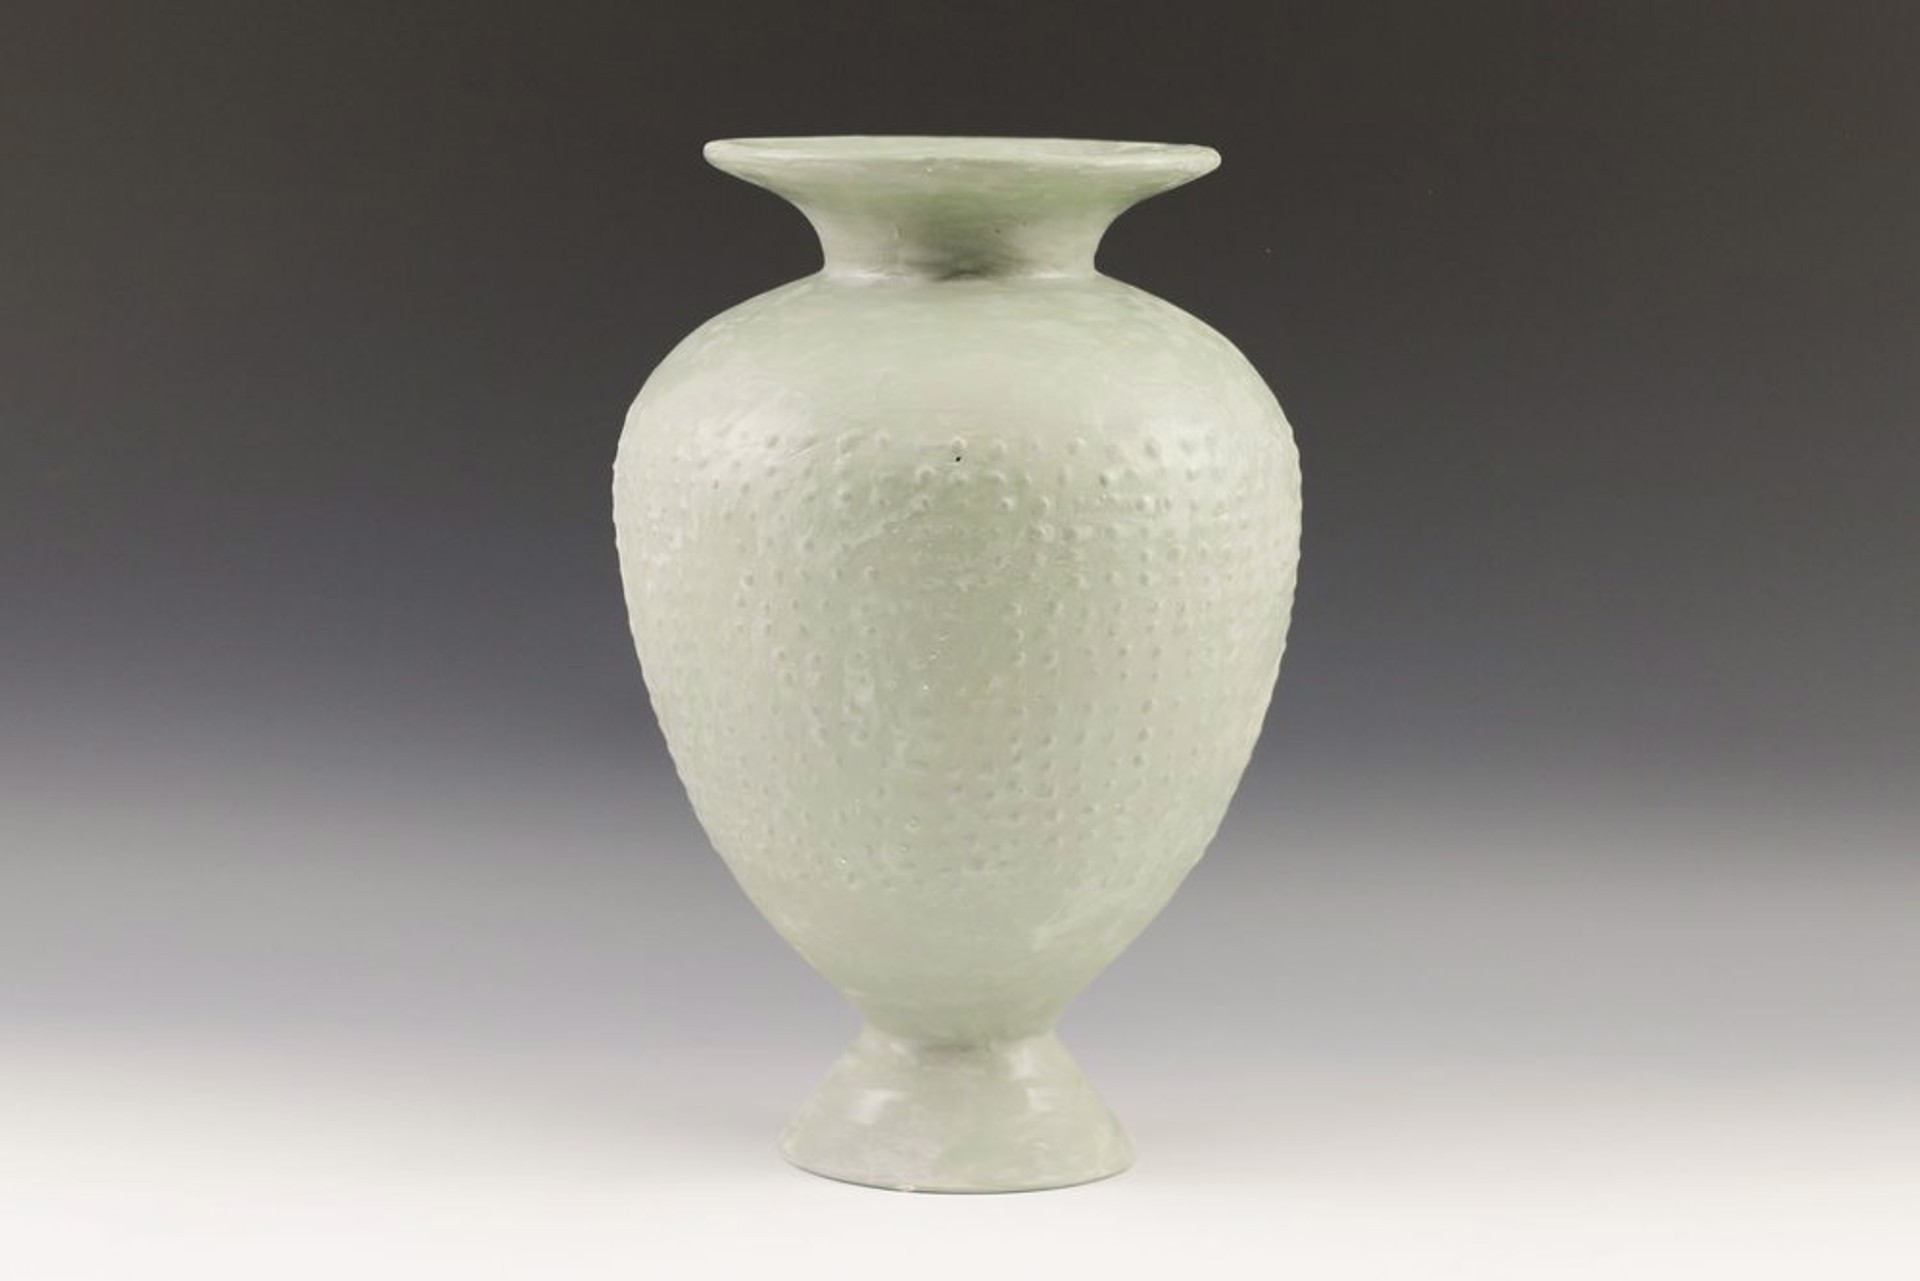 Vase with Dots by Maggie Jaszczak